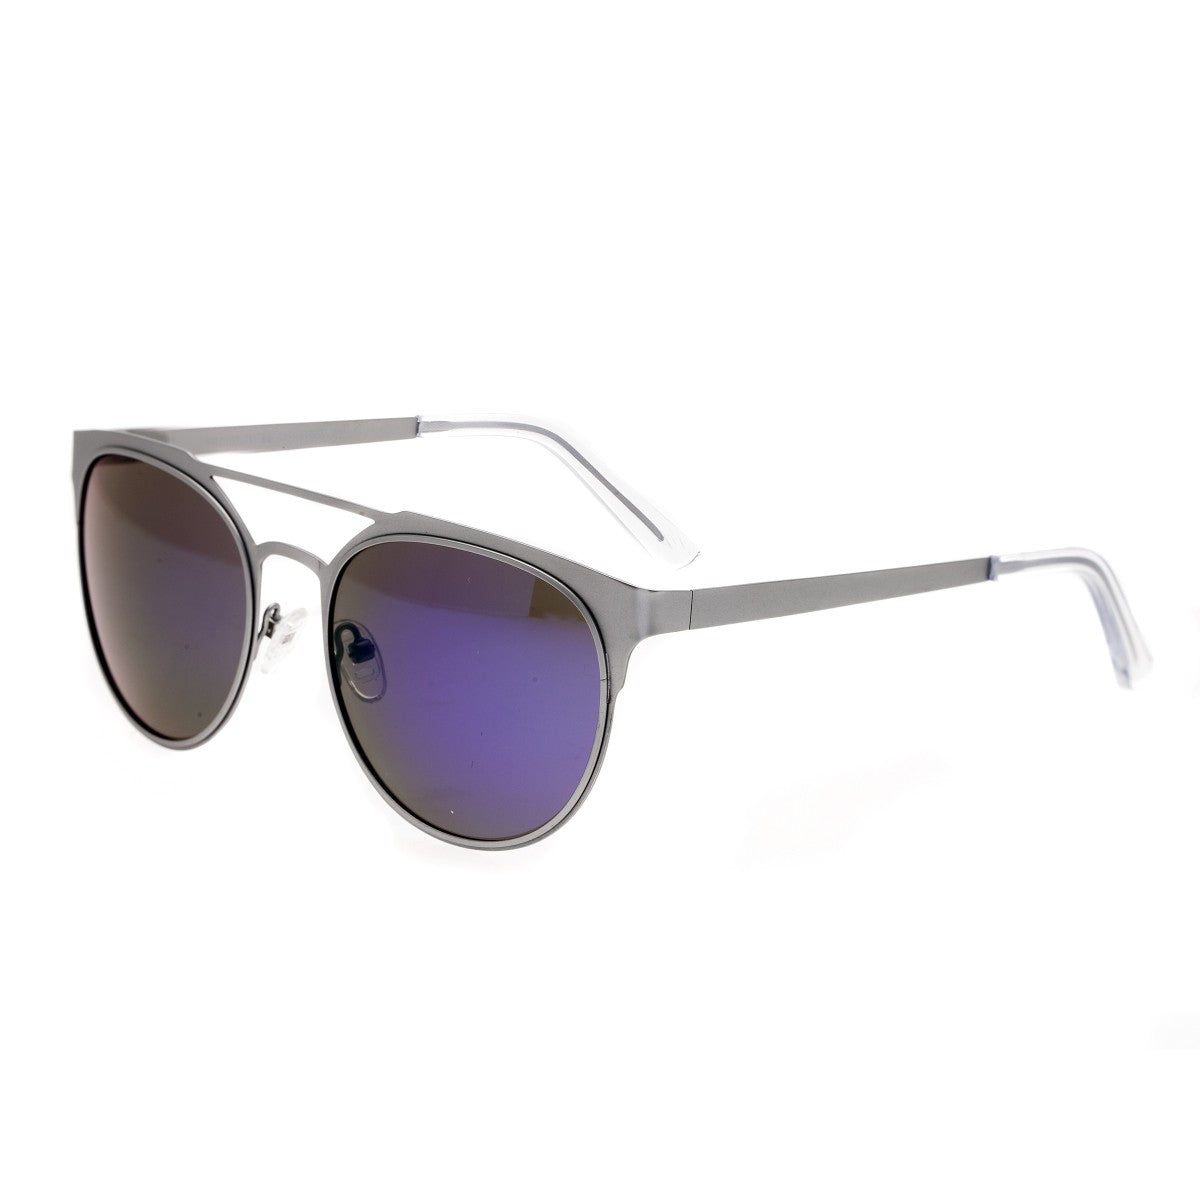 Breed Mensa Titanium Polarized Sunglasses - Silver/Purple-Blue - BSG037SL